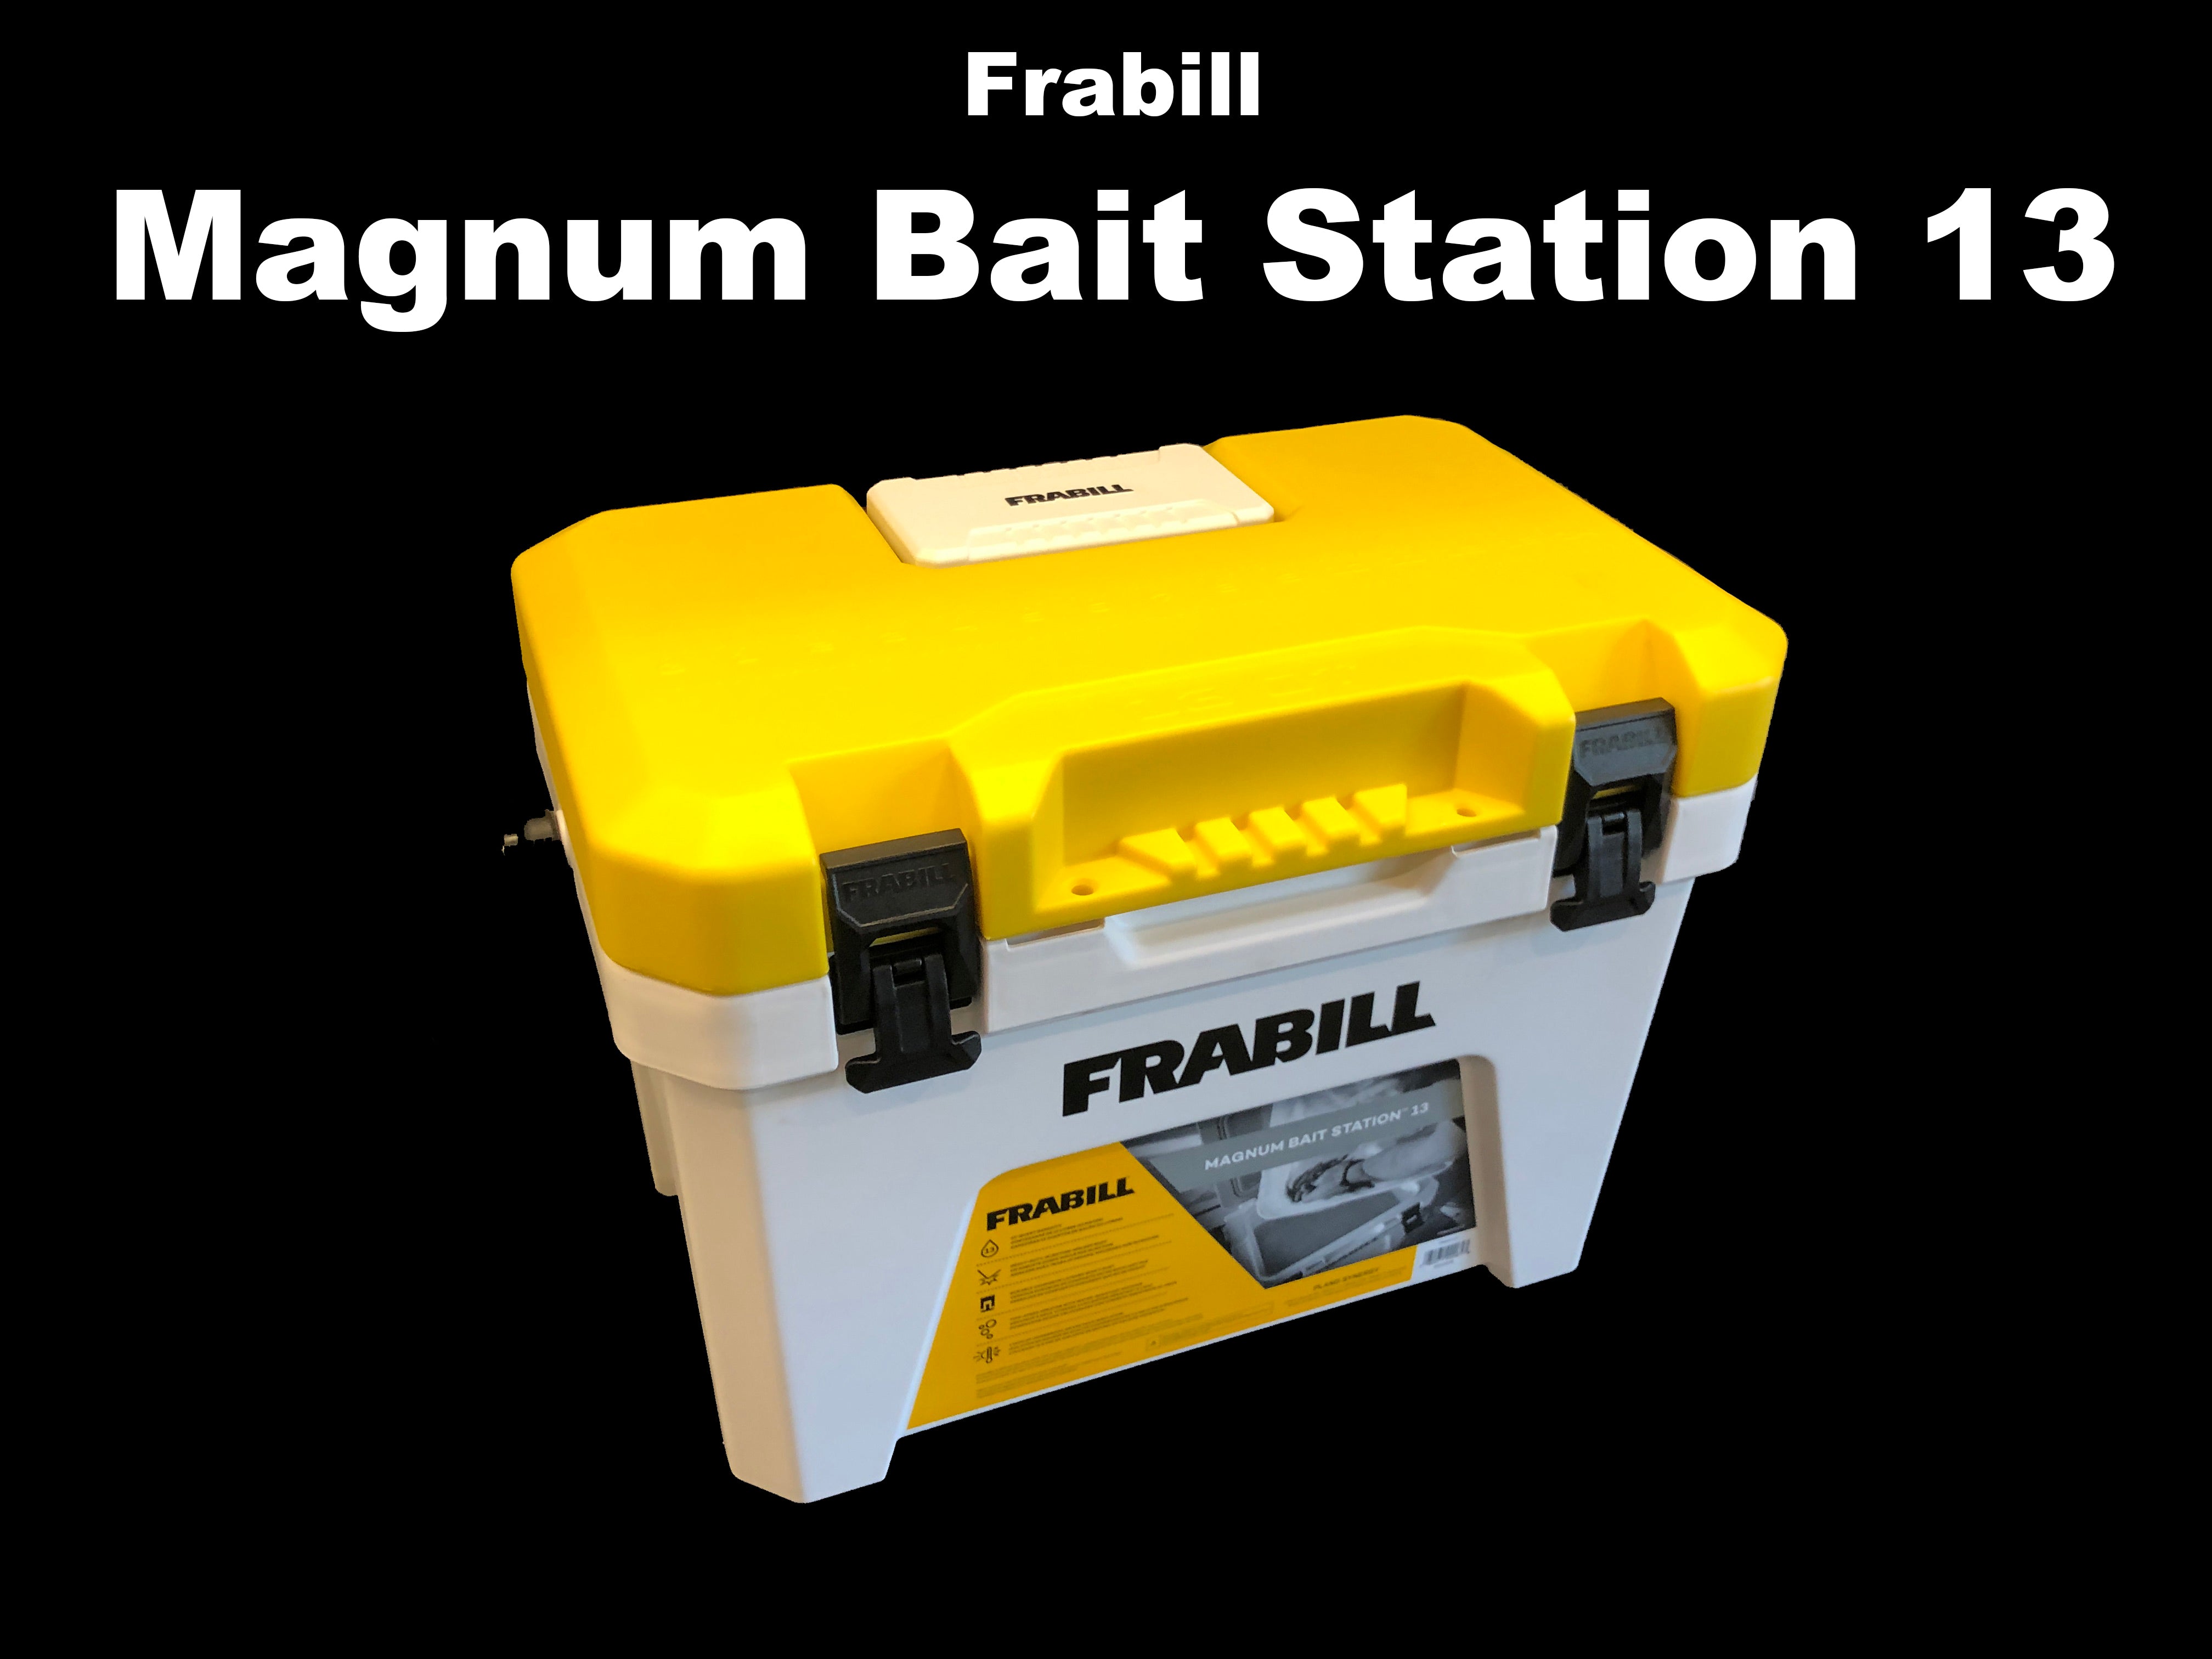 Frabill Magnum Bait Station